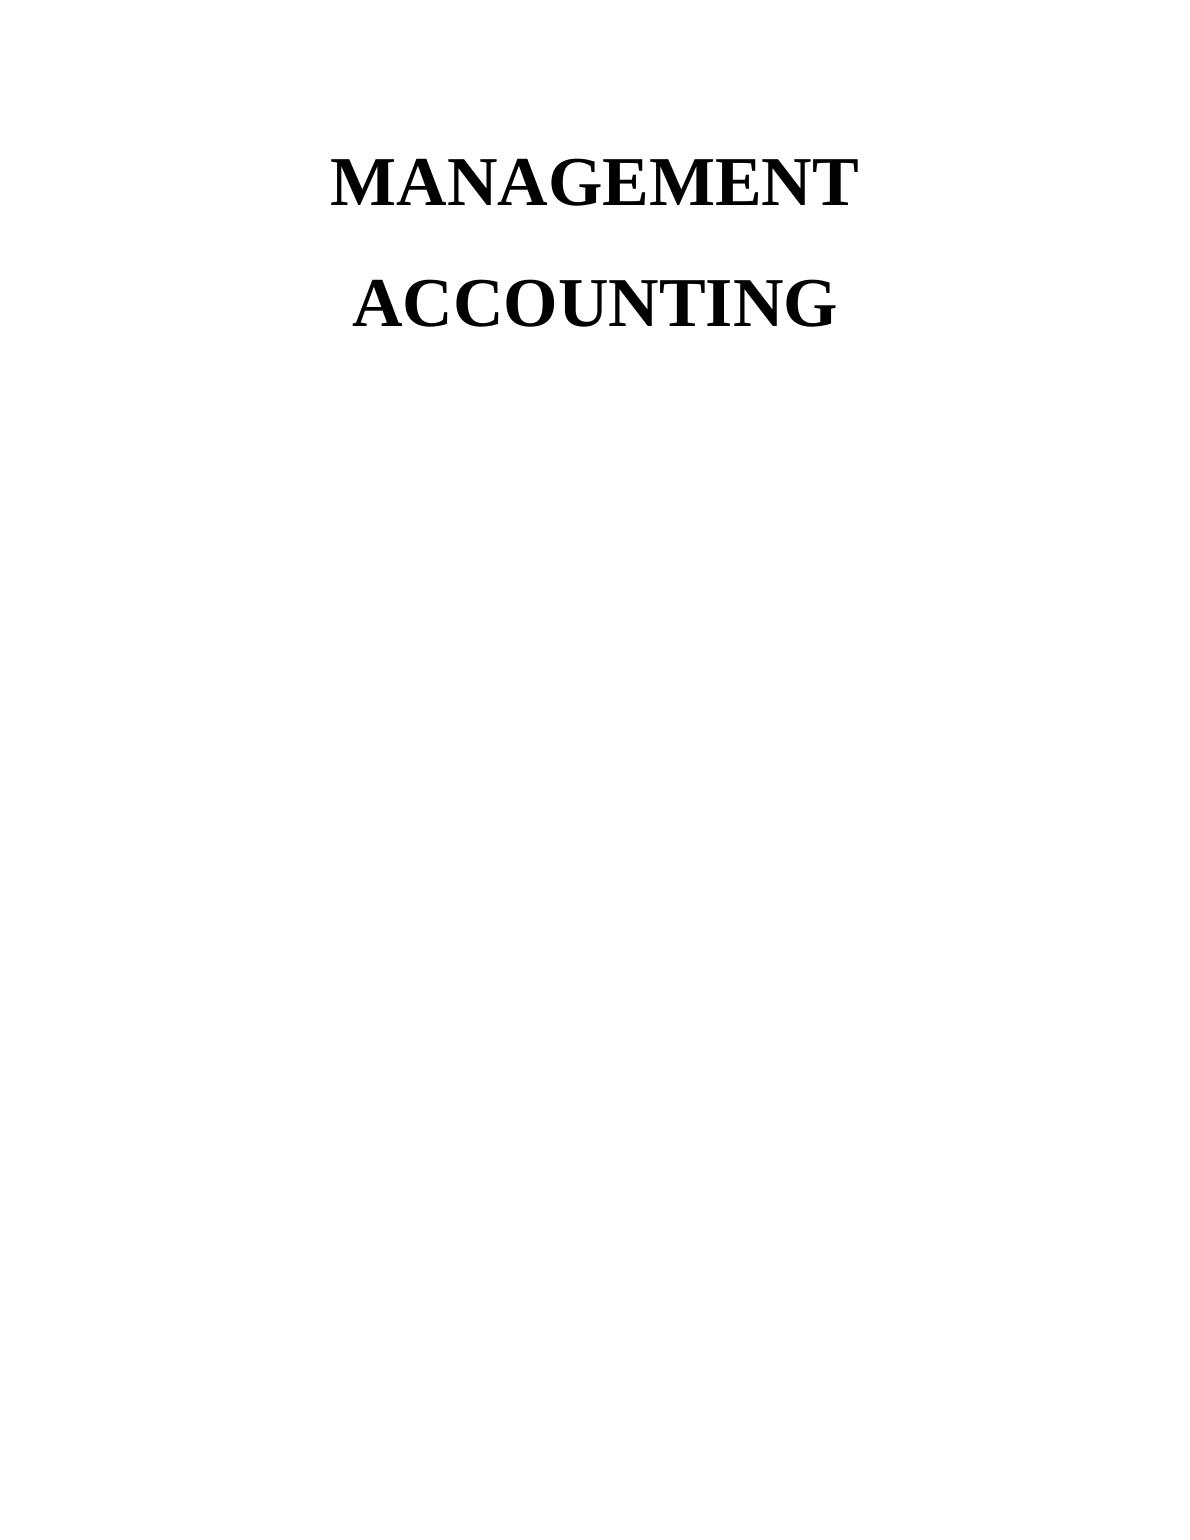 Management Accounting Assignment- Jupiter PLC_1